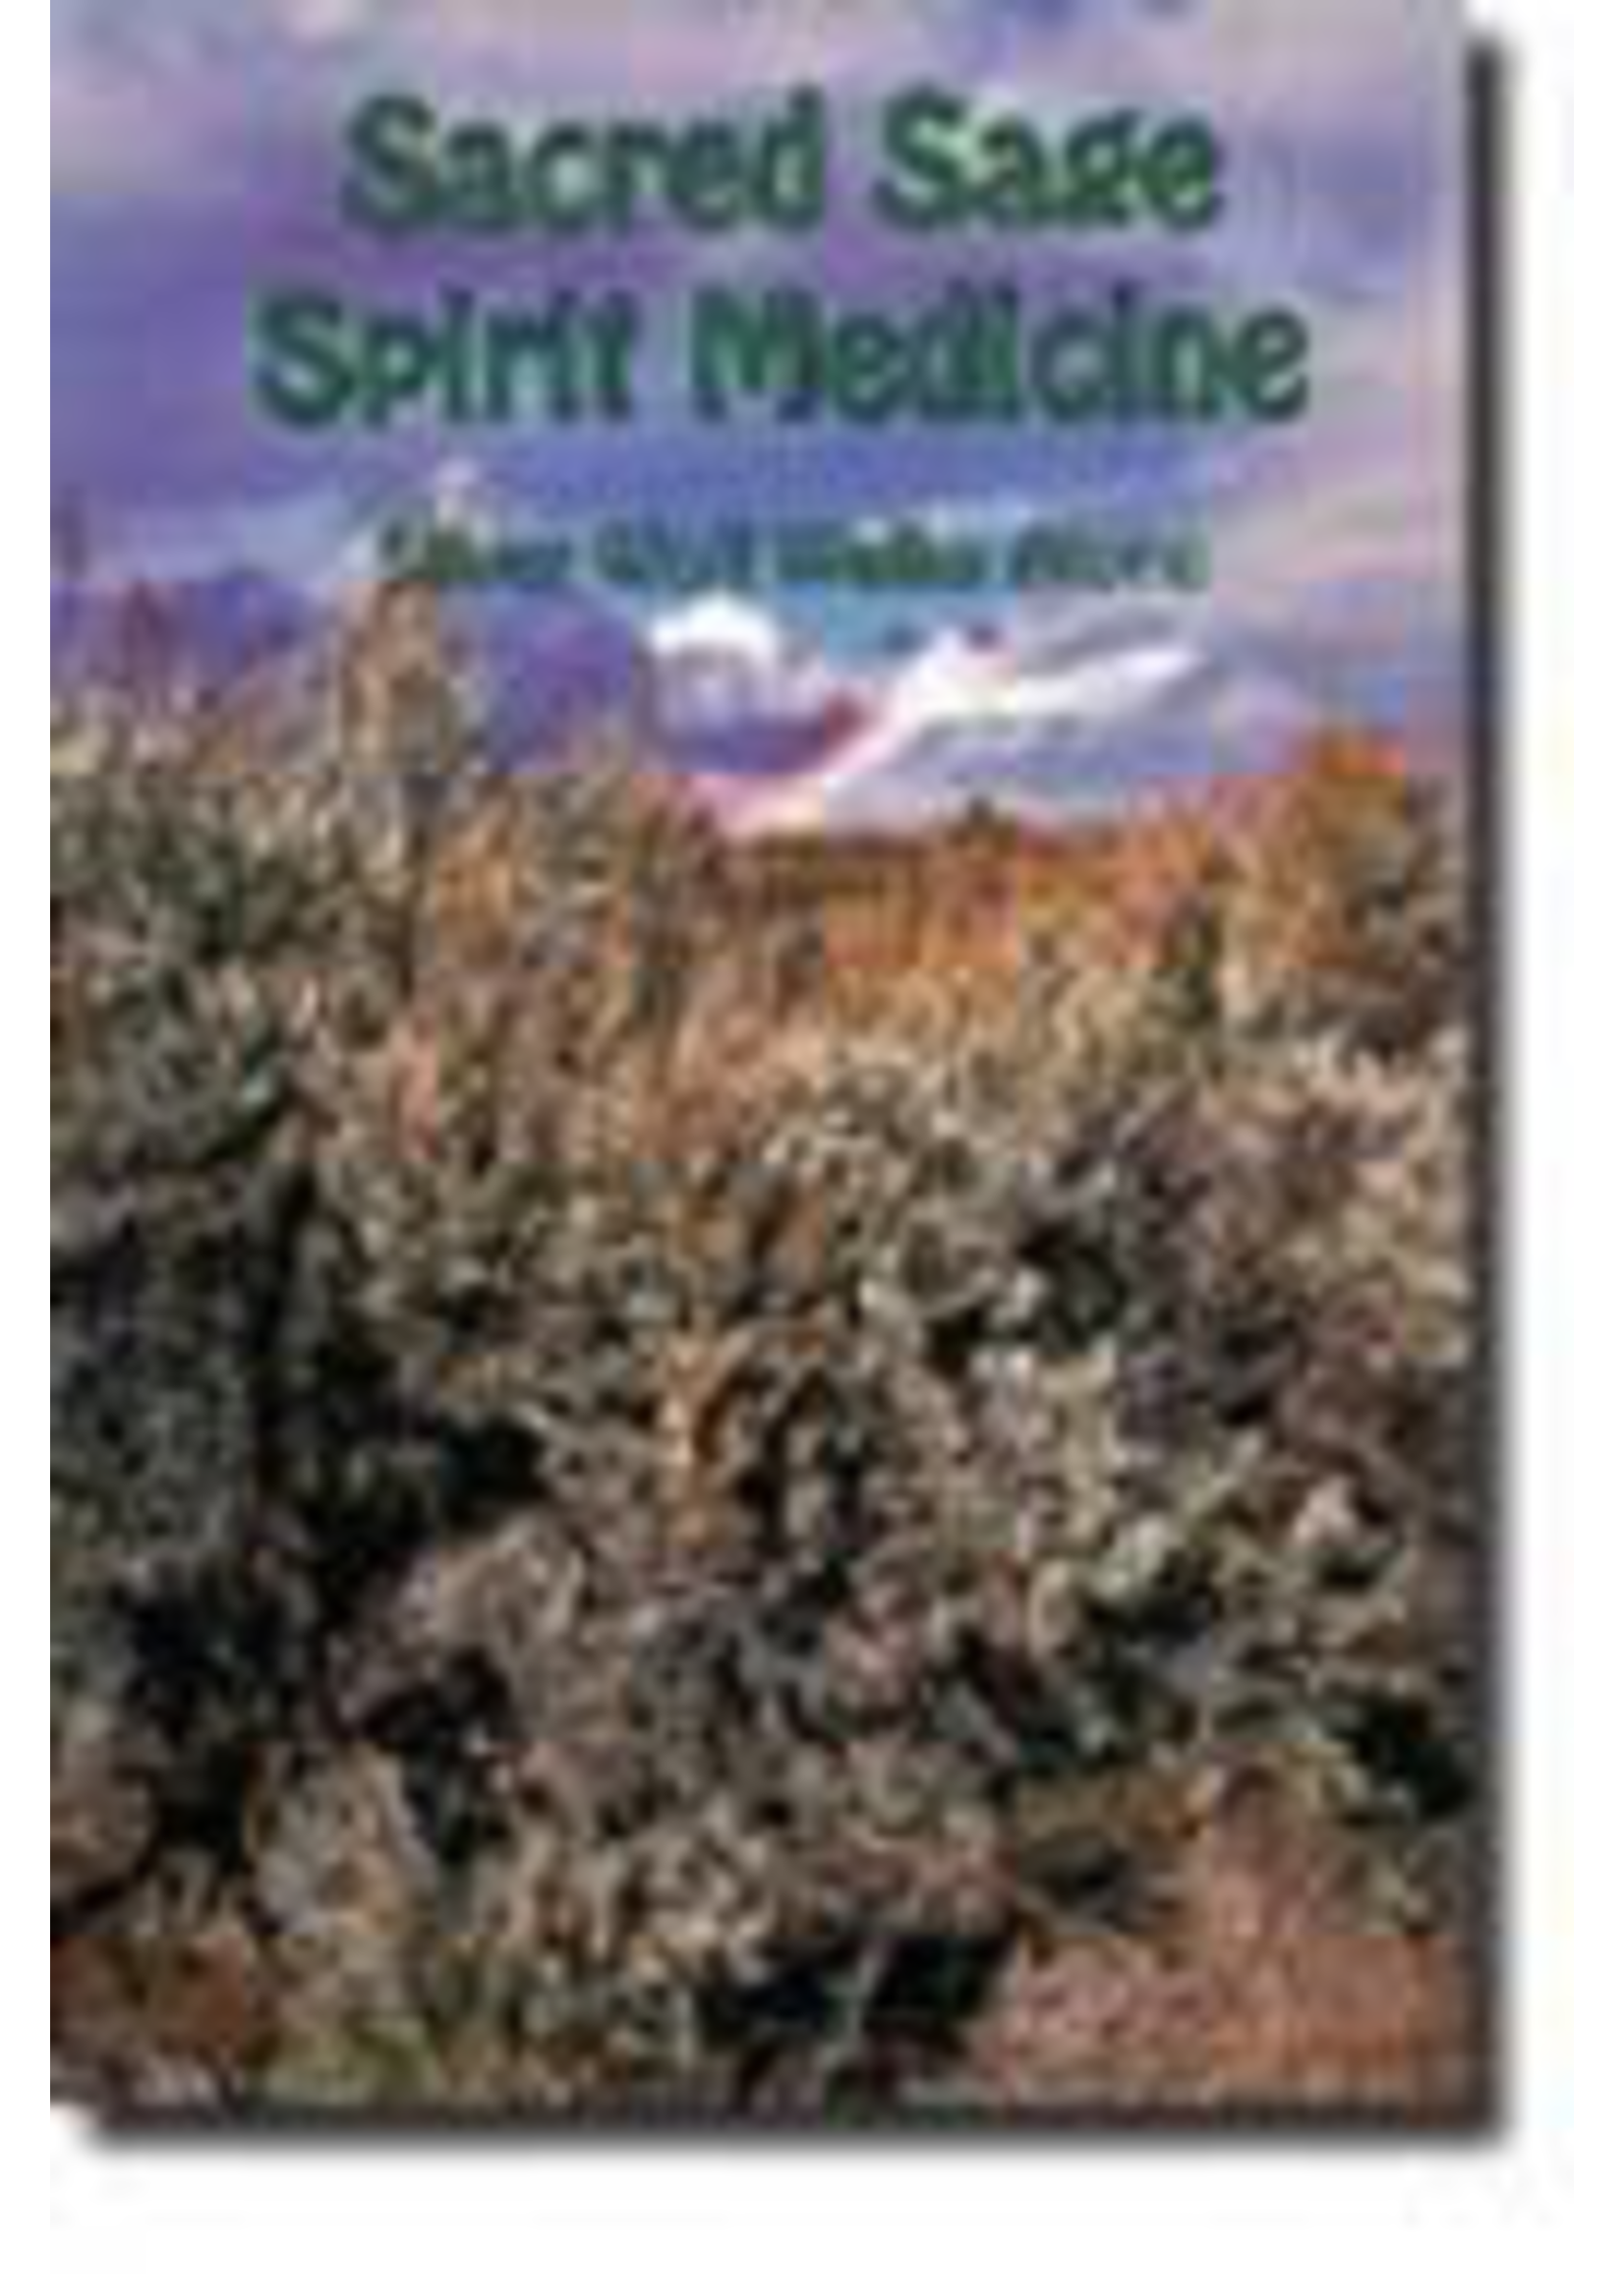 Sacred Sage Spirit Medicine